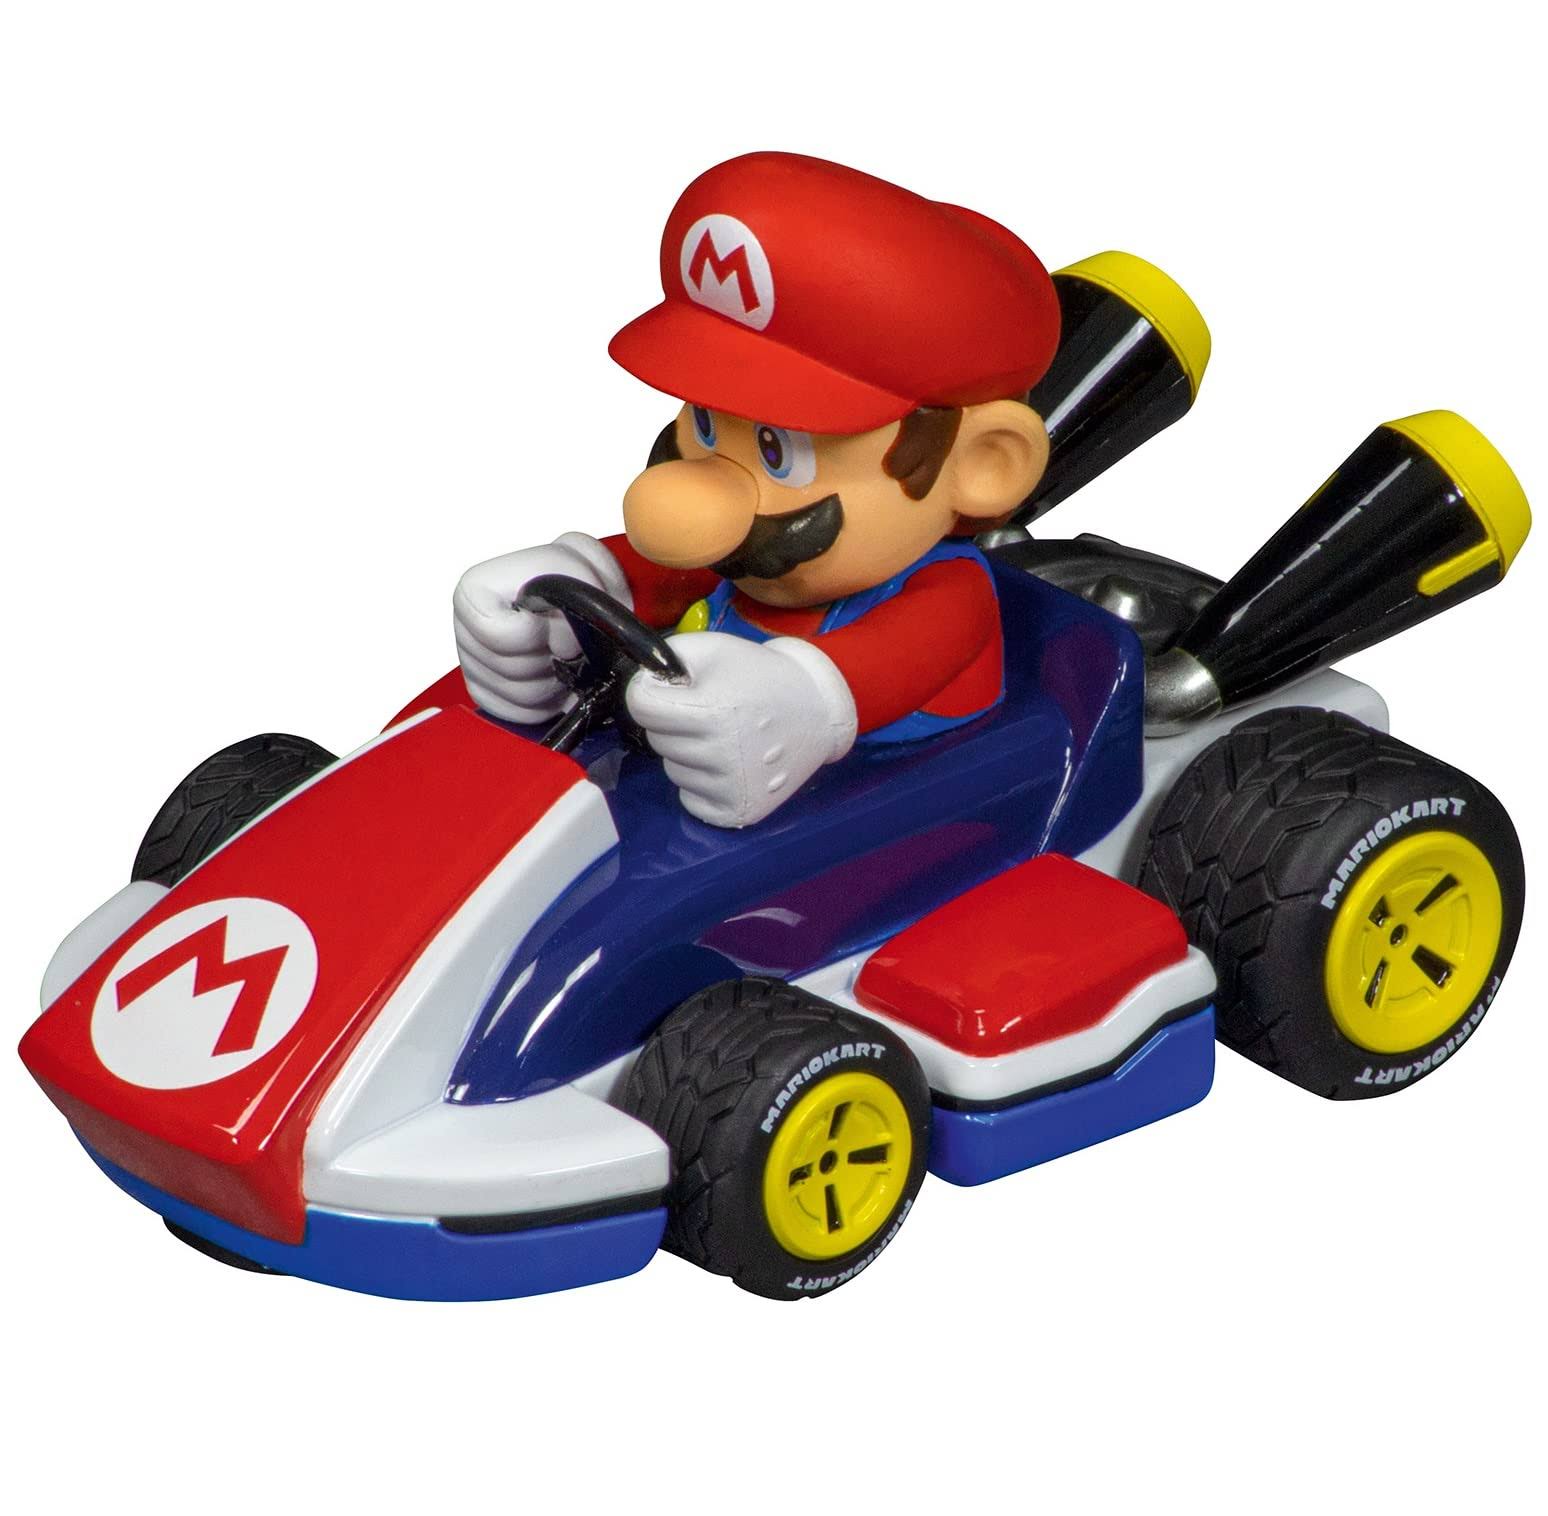 27729 Carrera Evolution Mario Kart - Mario 1:32 Slot Car